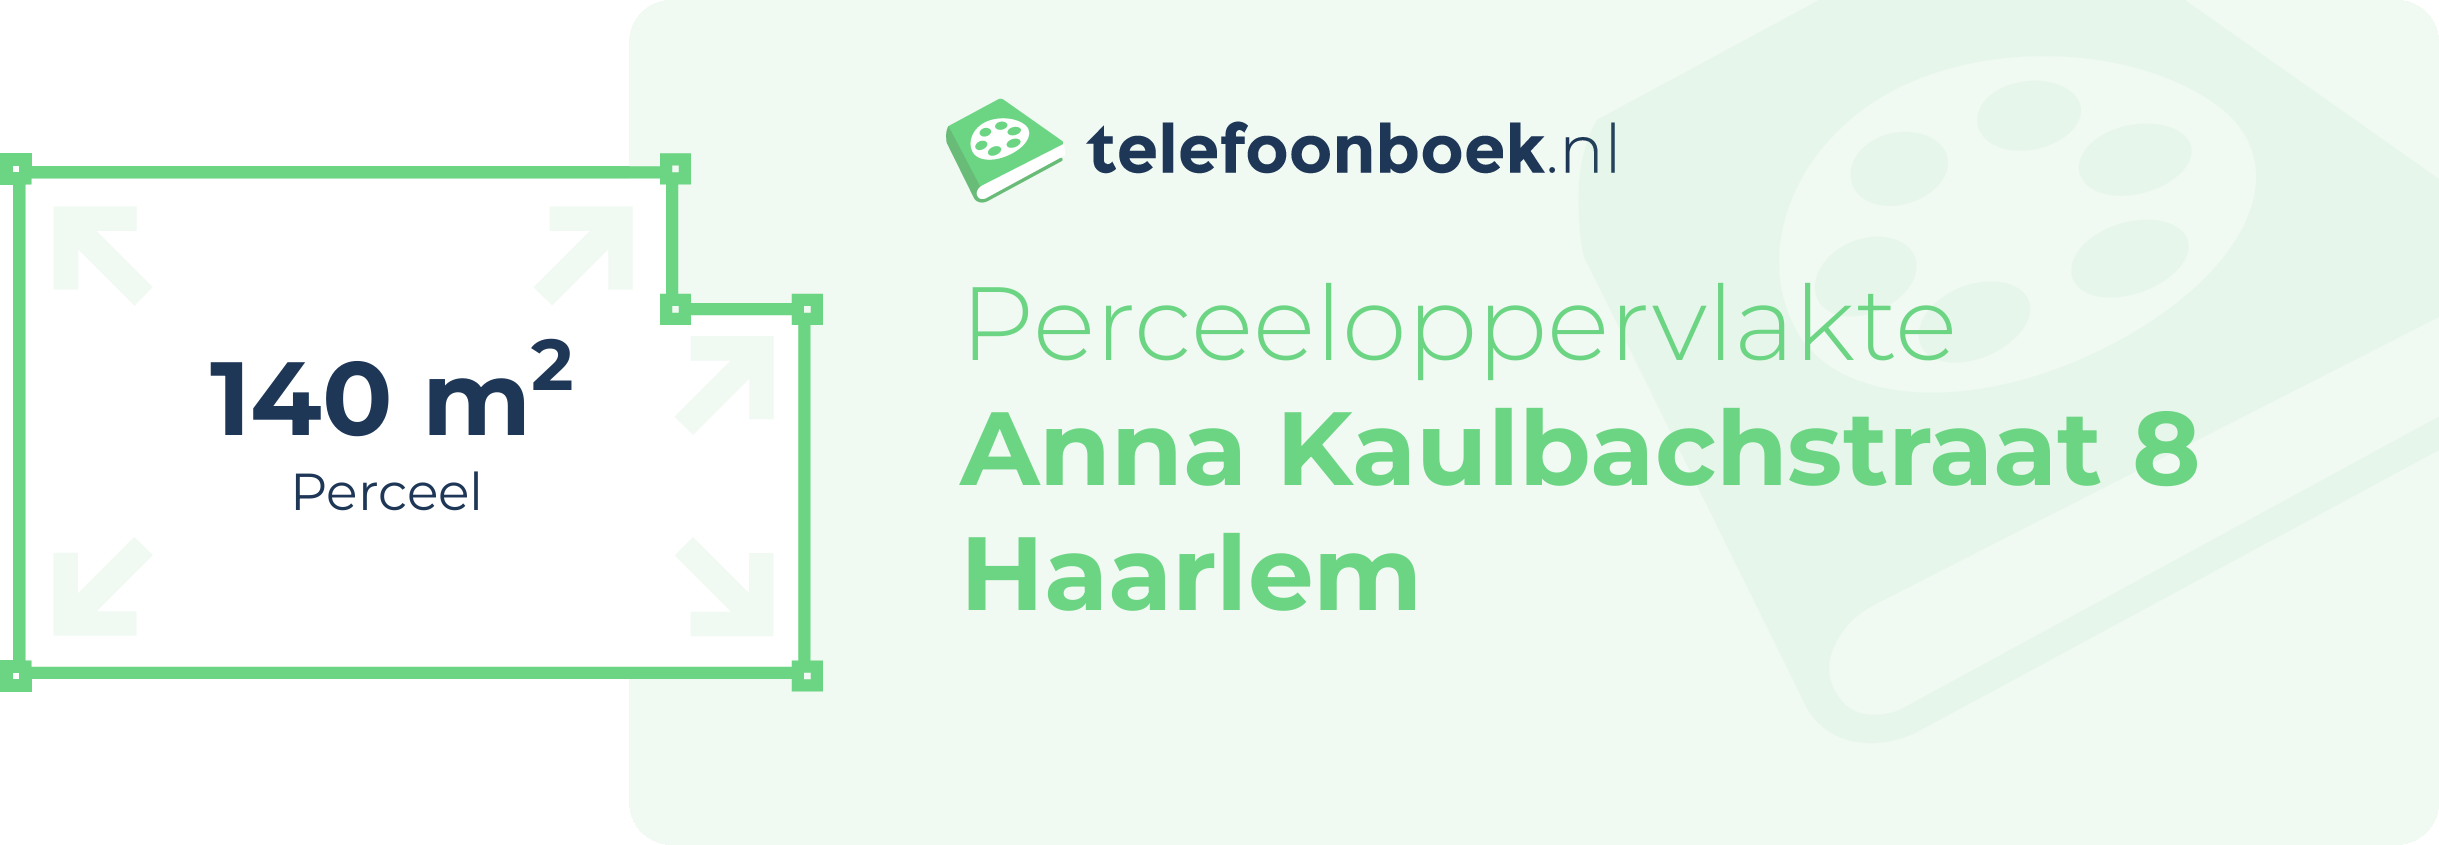 Perceeloppervlakte Anna Kaulbachstraat 8 Haarlem